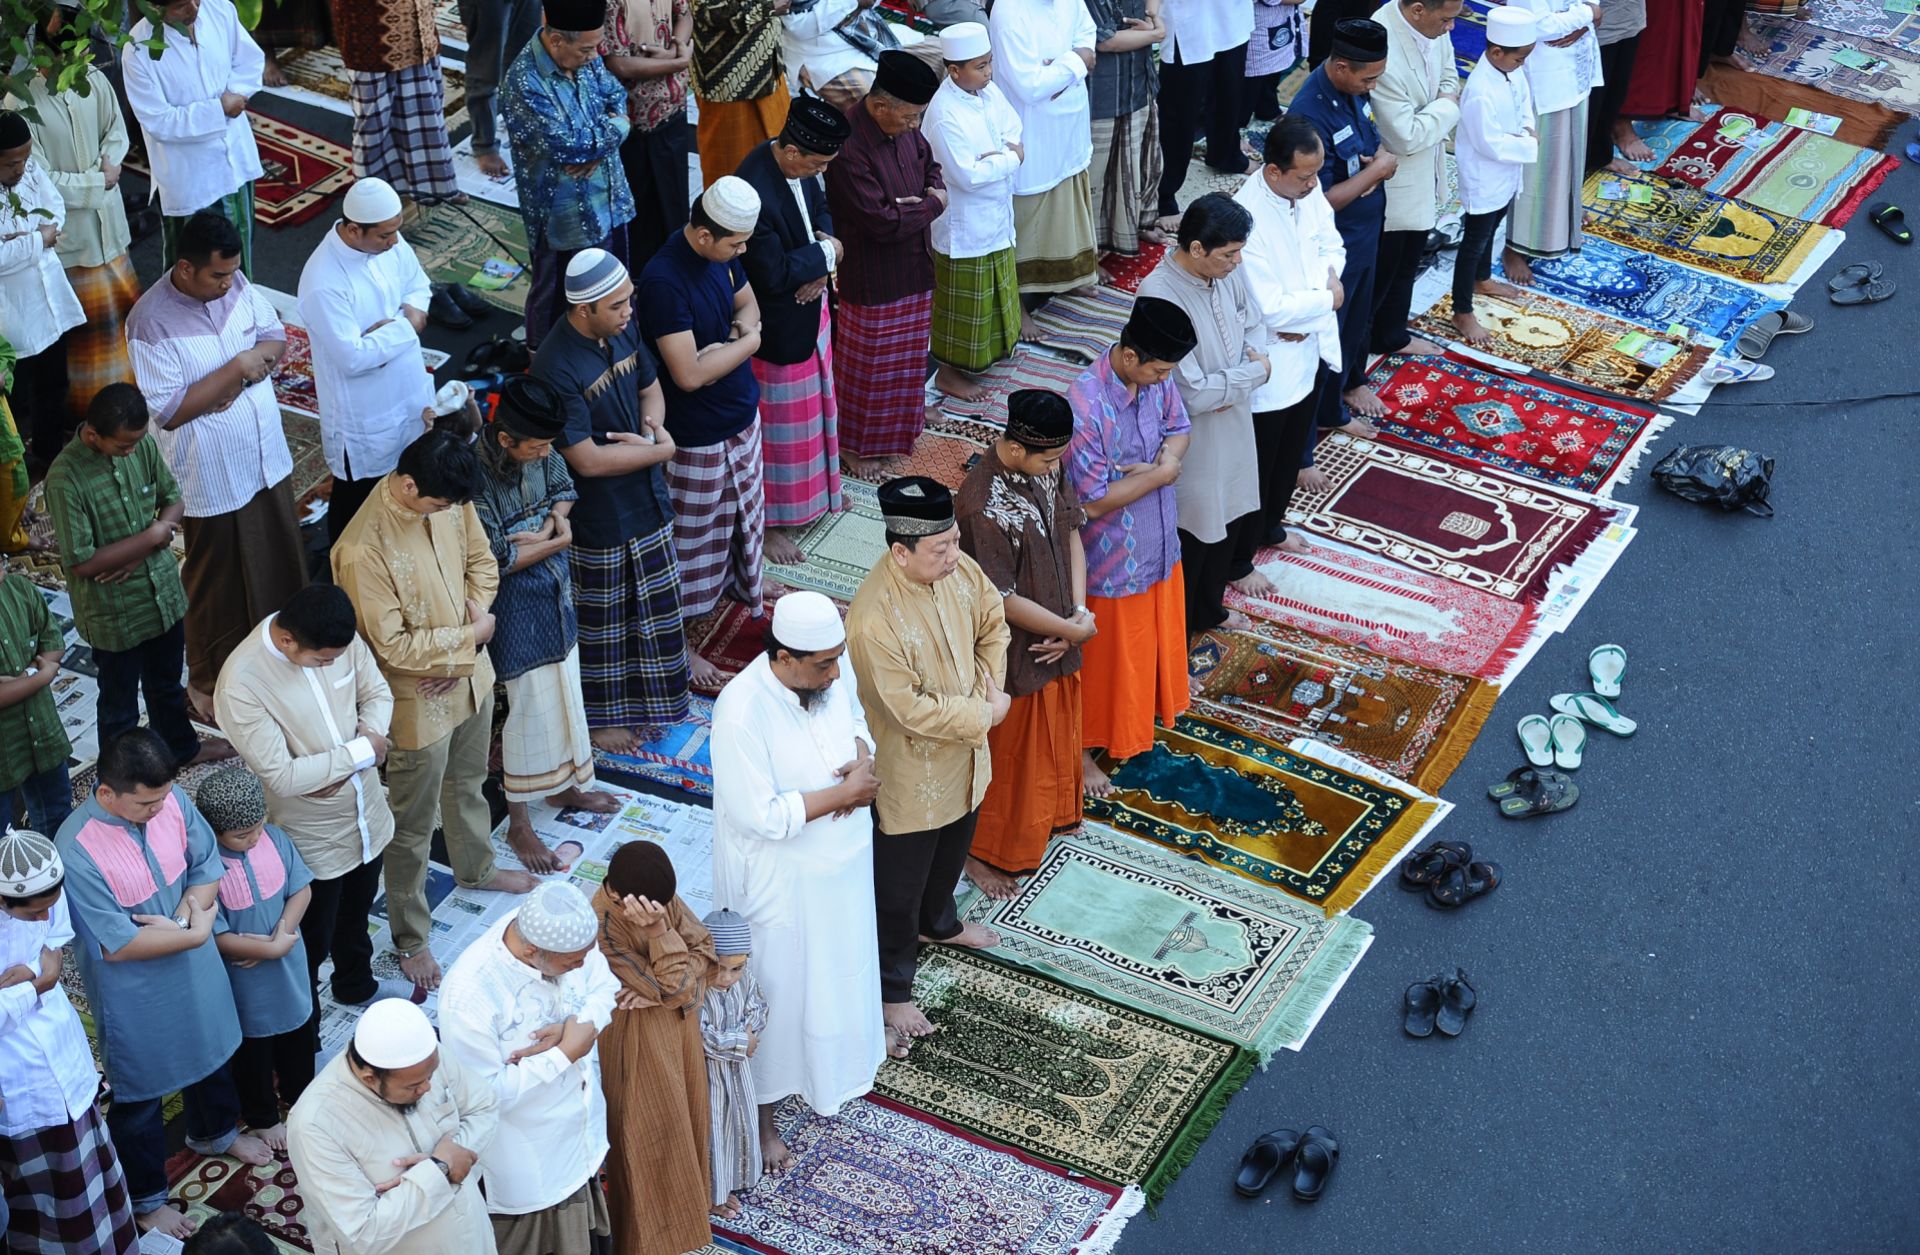 Muslims pray in Surabaya, Indonesia. 